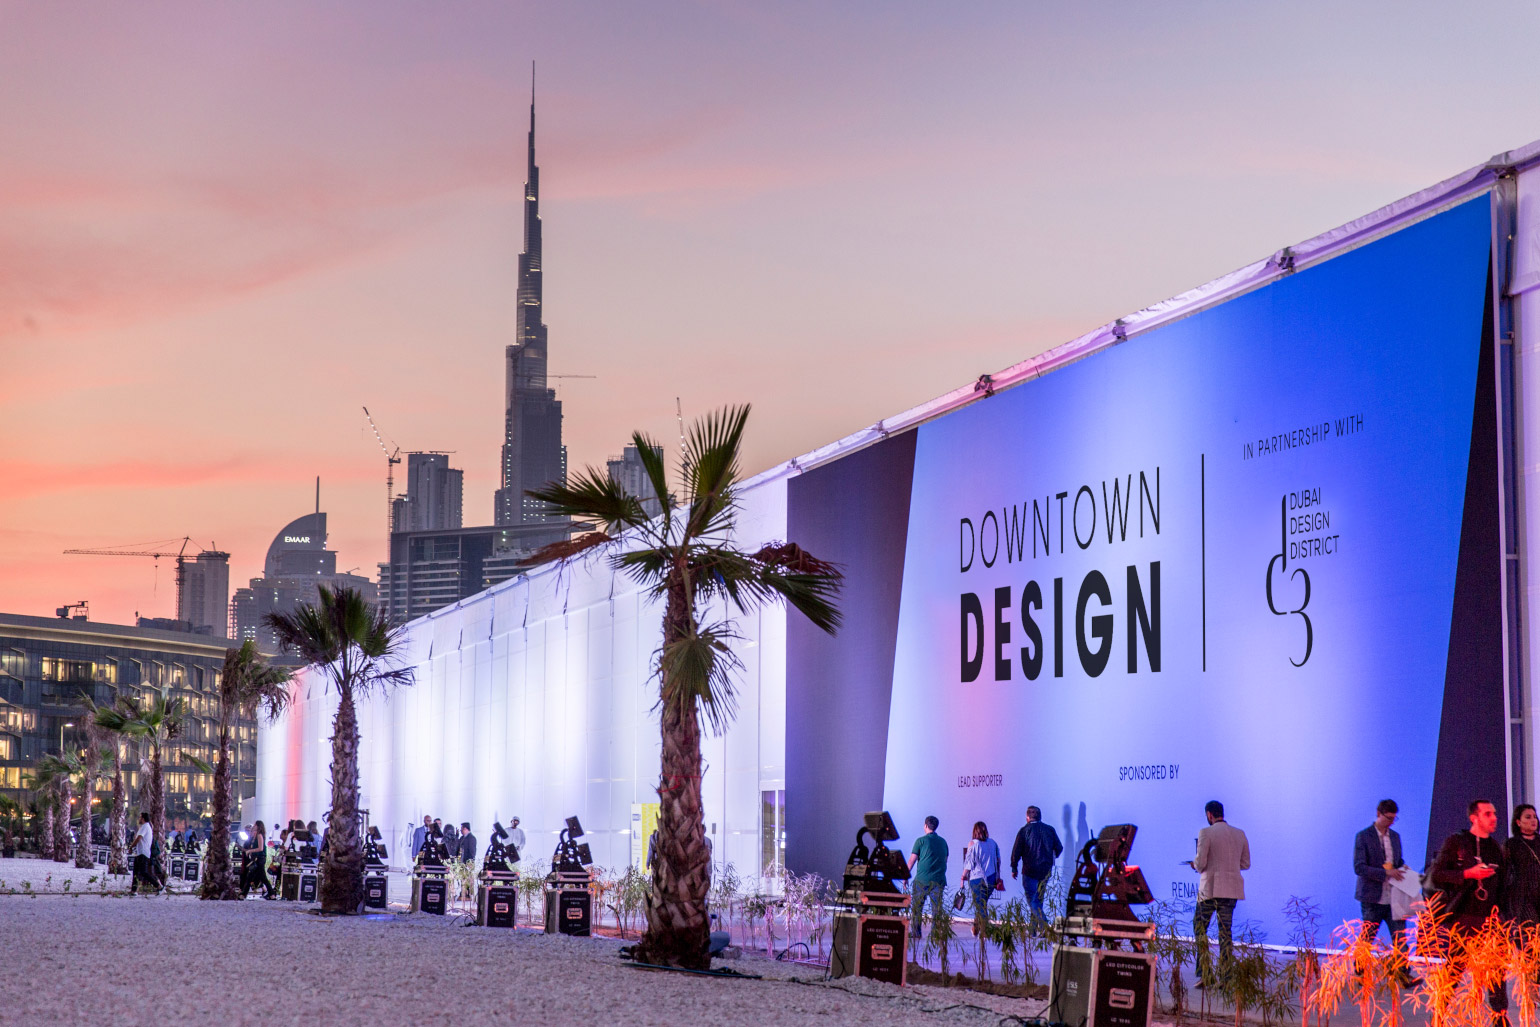 Downtown design billboard in Dubai